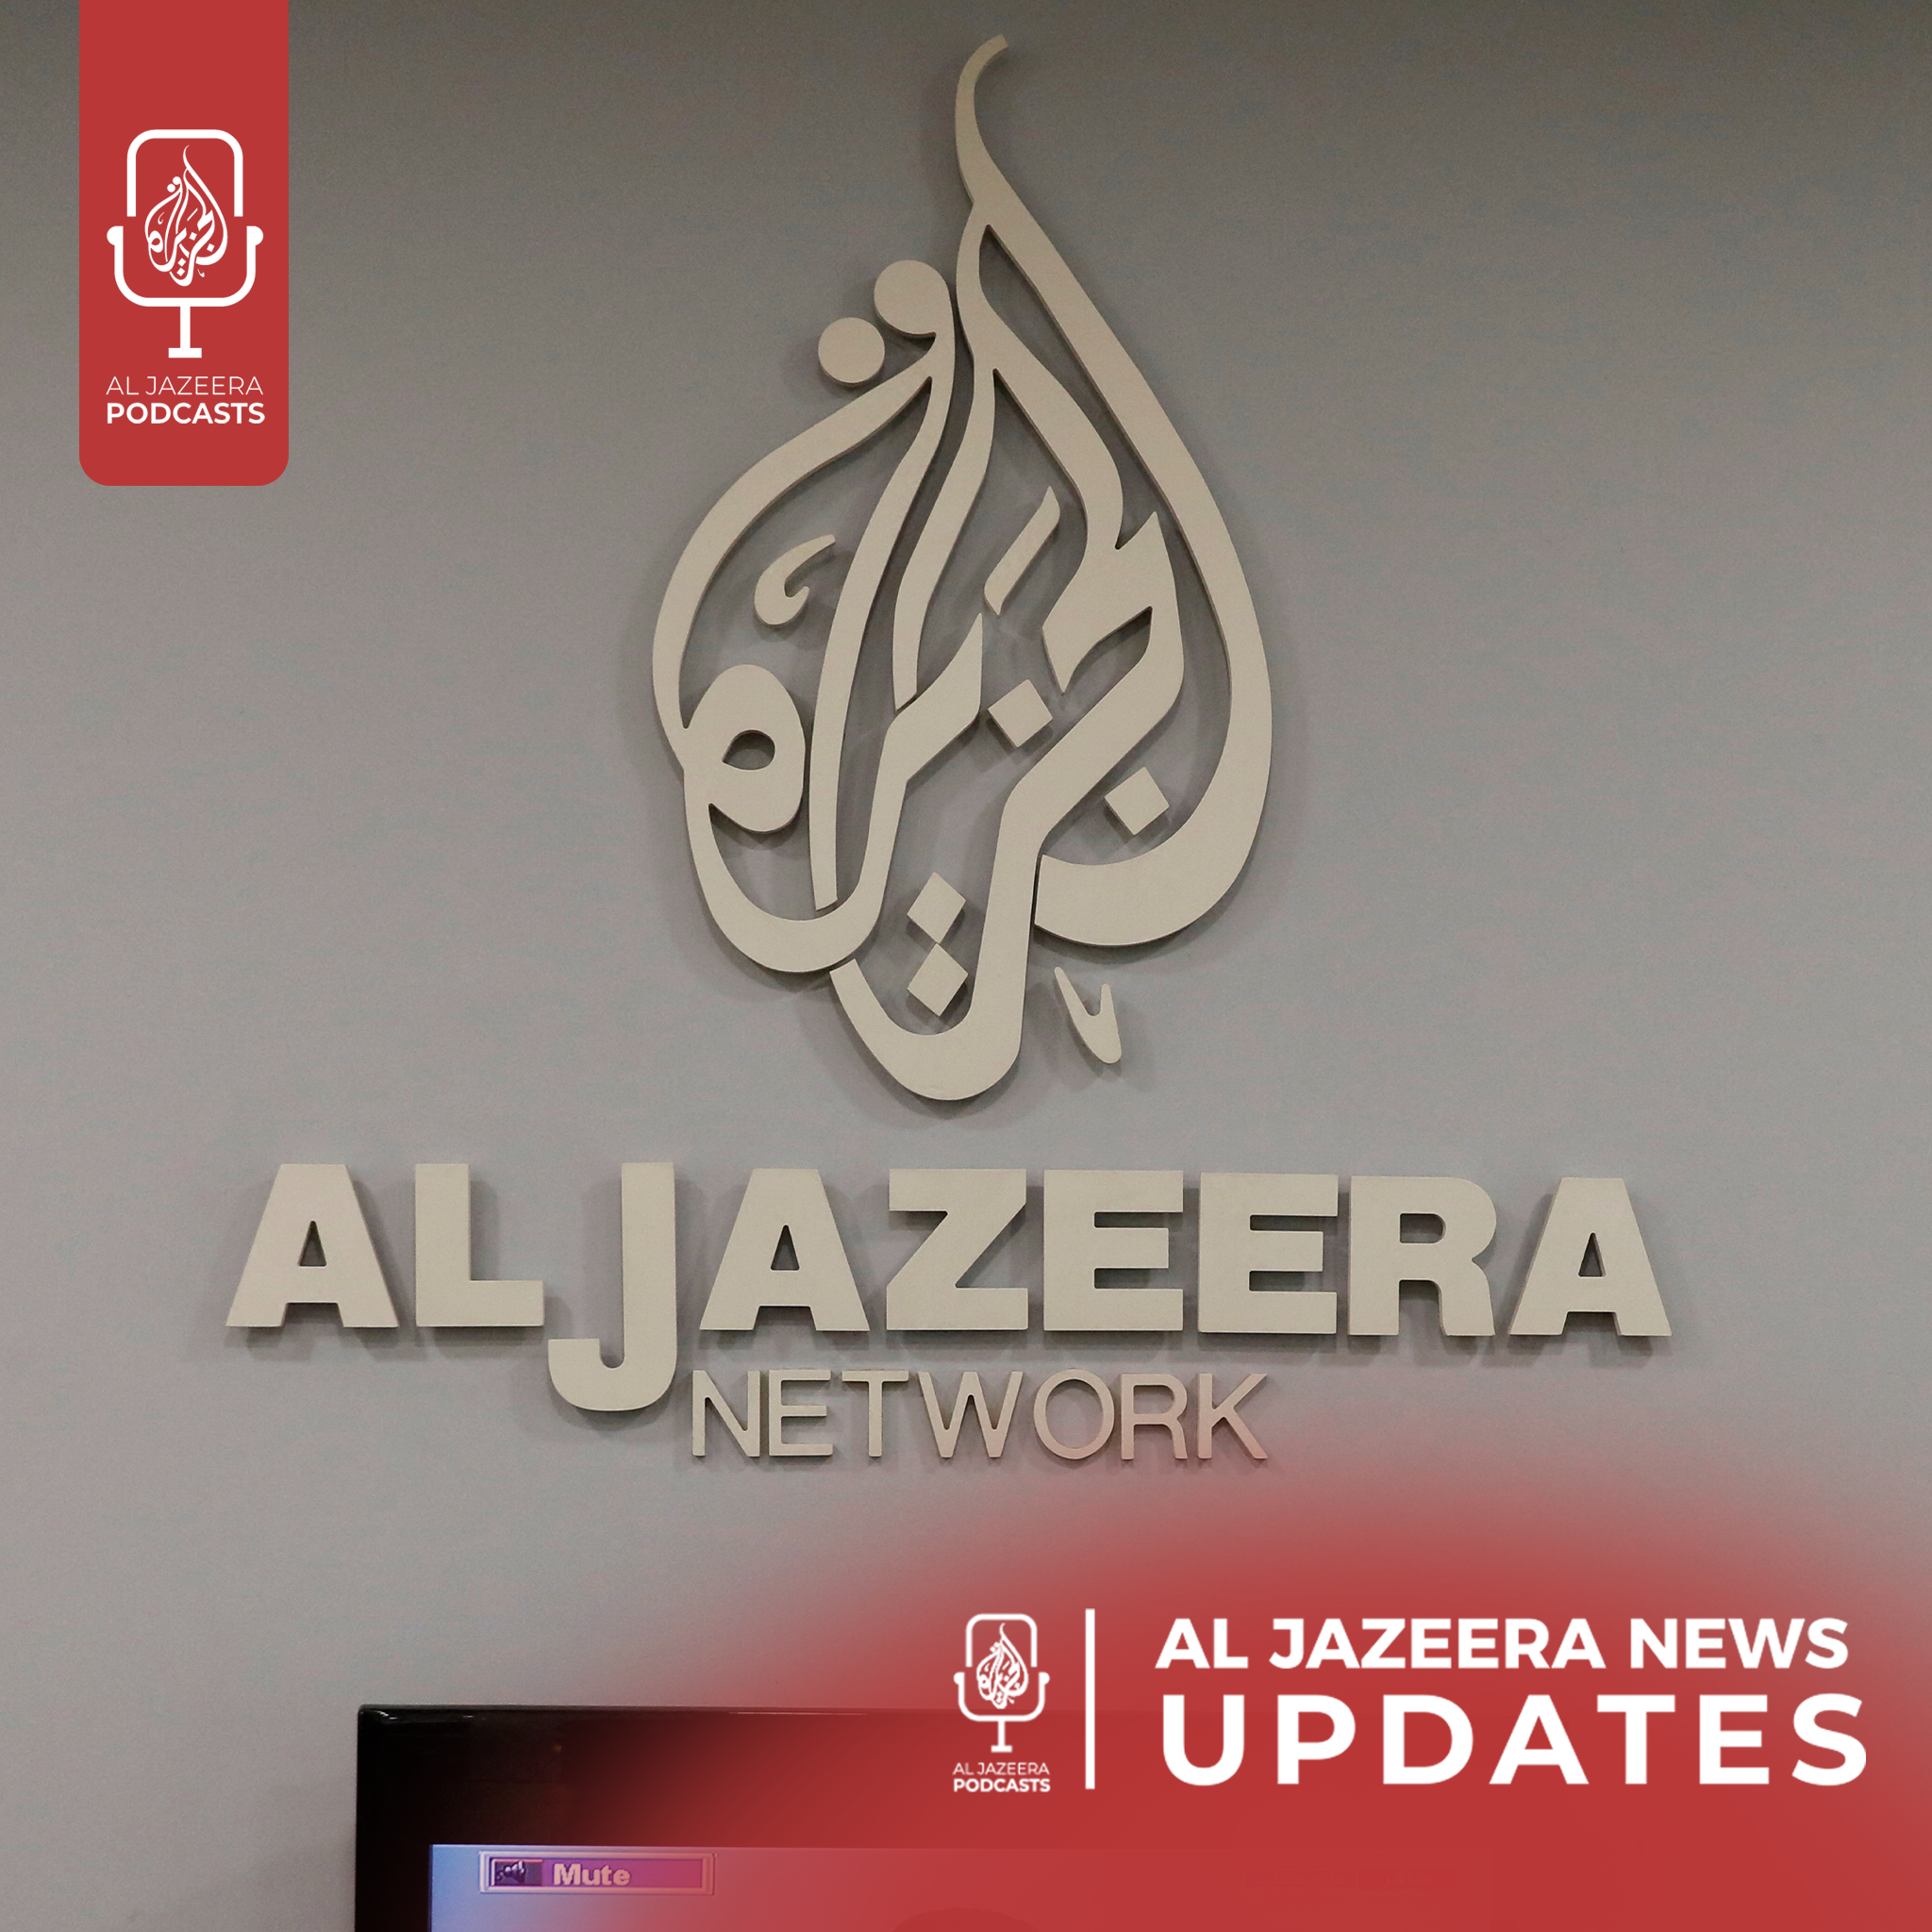 Netanyahu's cabinet shuts down Al Jazeera offices in Israel, Gaza ceasefire talks